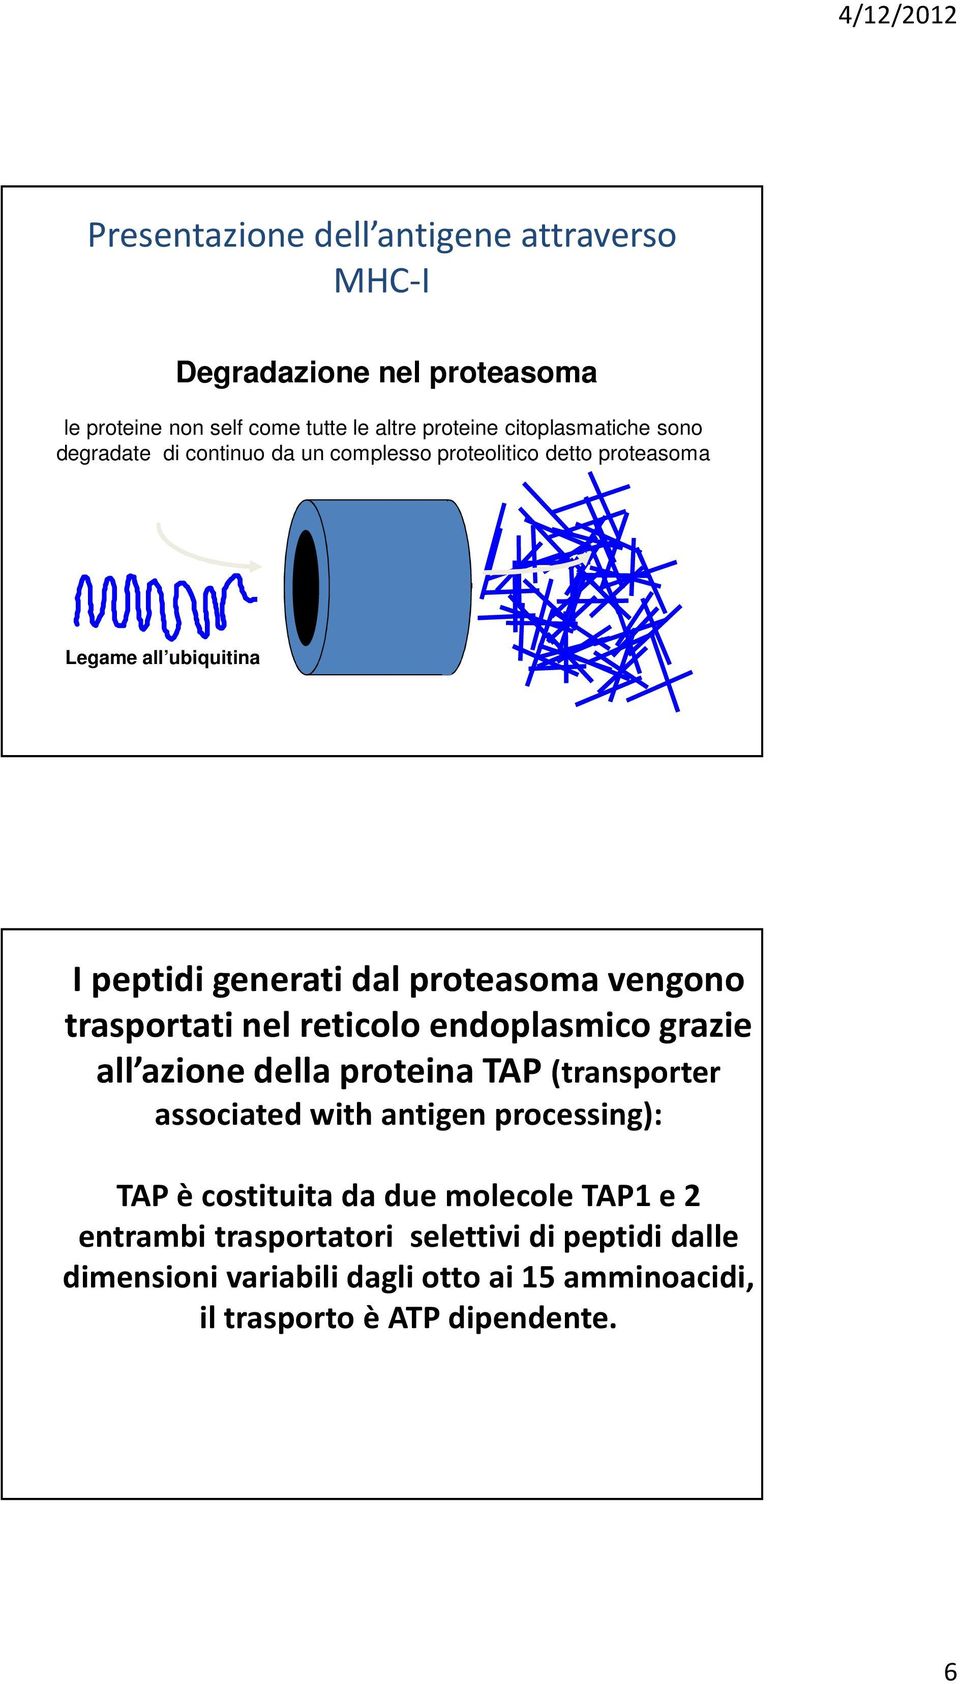 trasportatinelreticoloendoplasmicograzie all azionedellaproteinatap (transporter associated with antigen processing): TAP è costituitada due